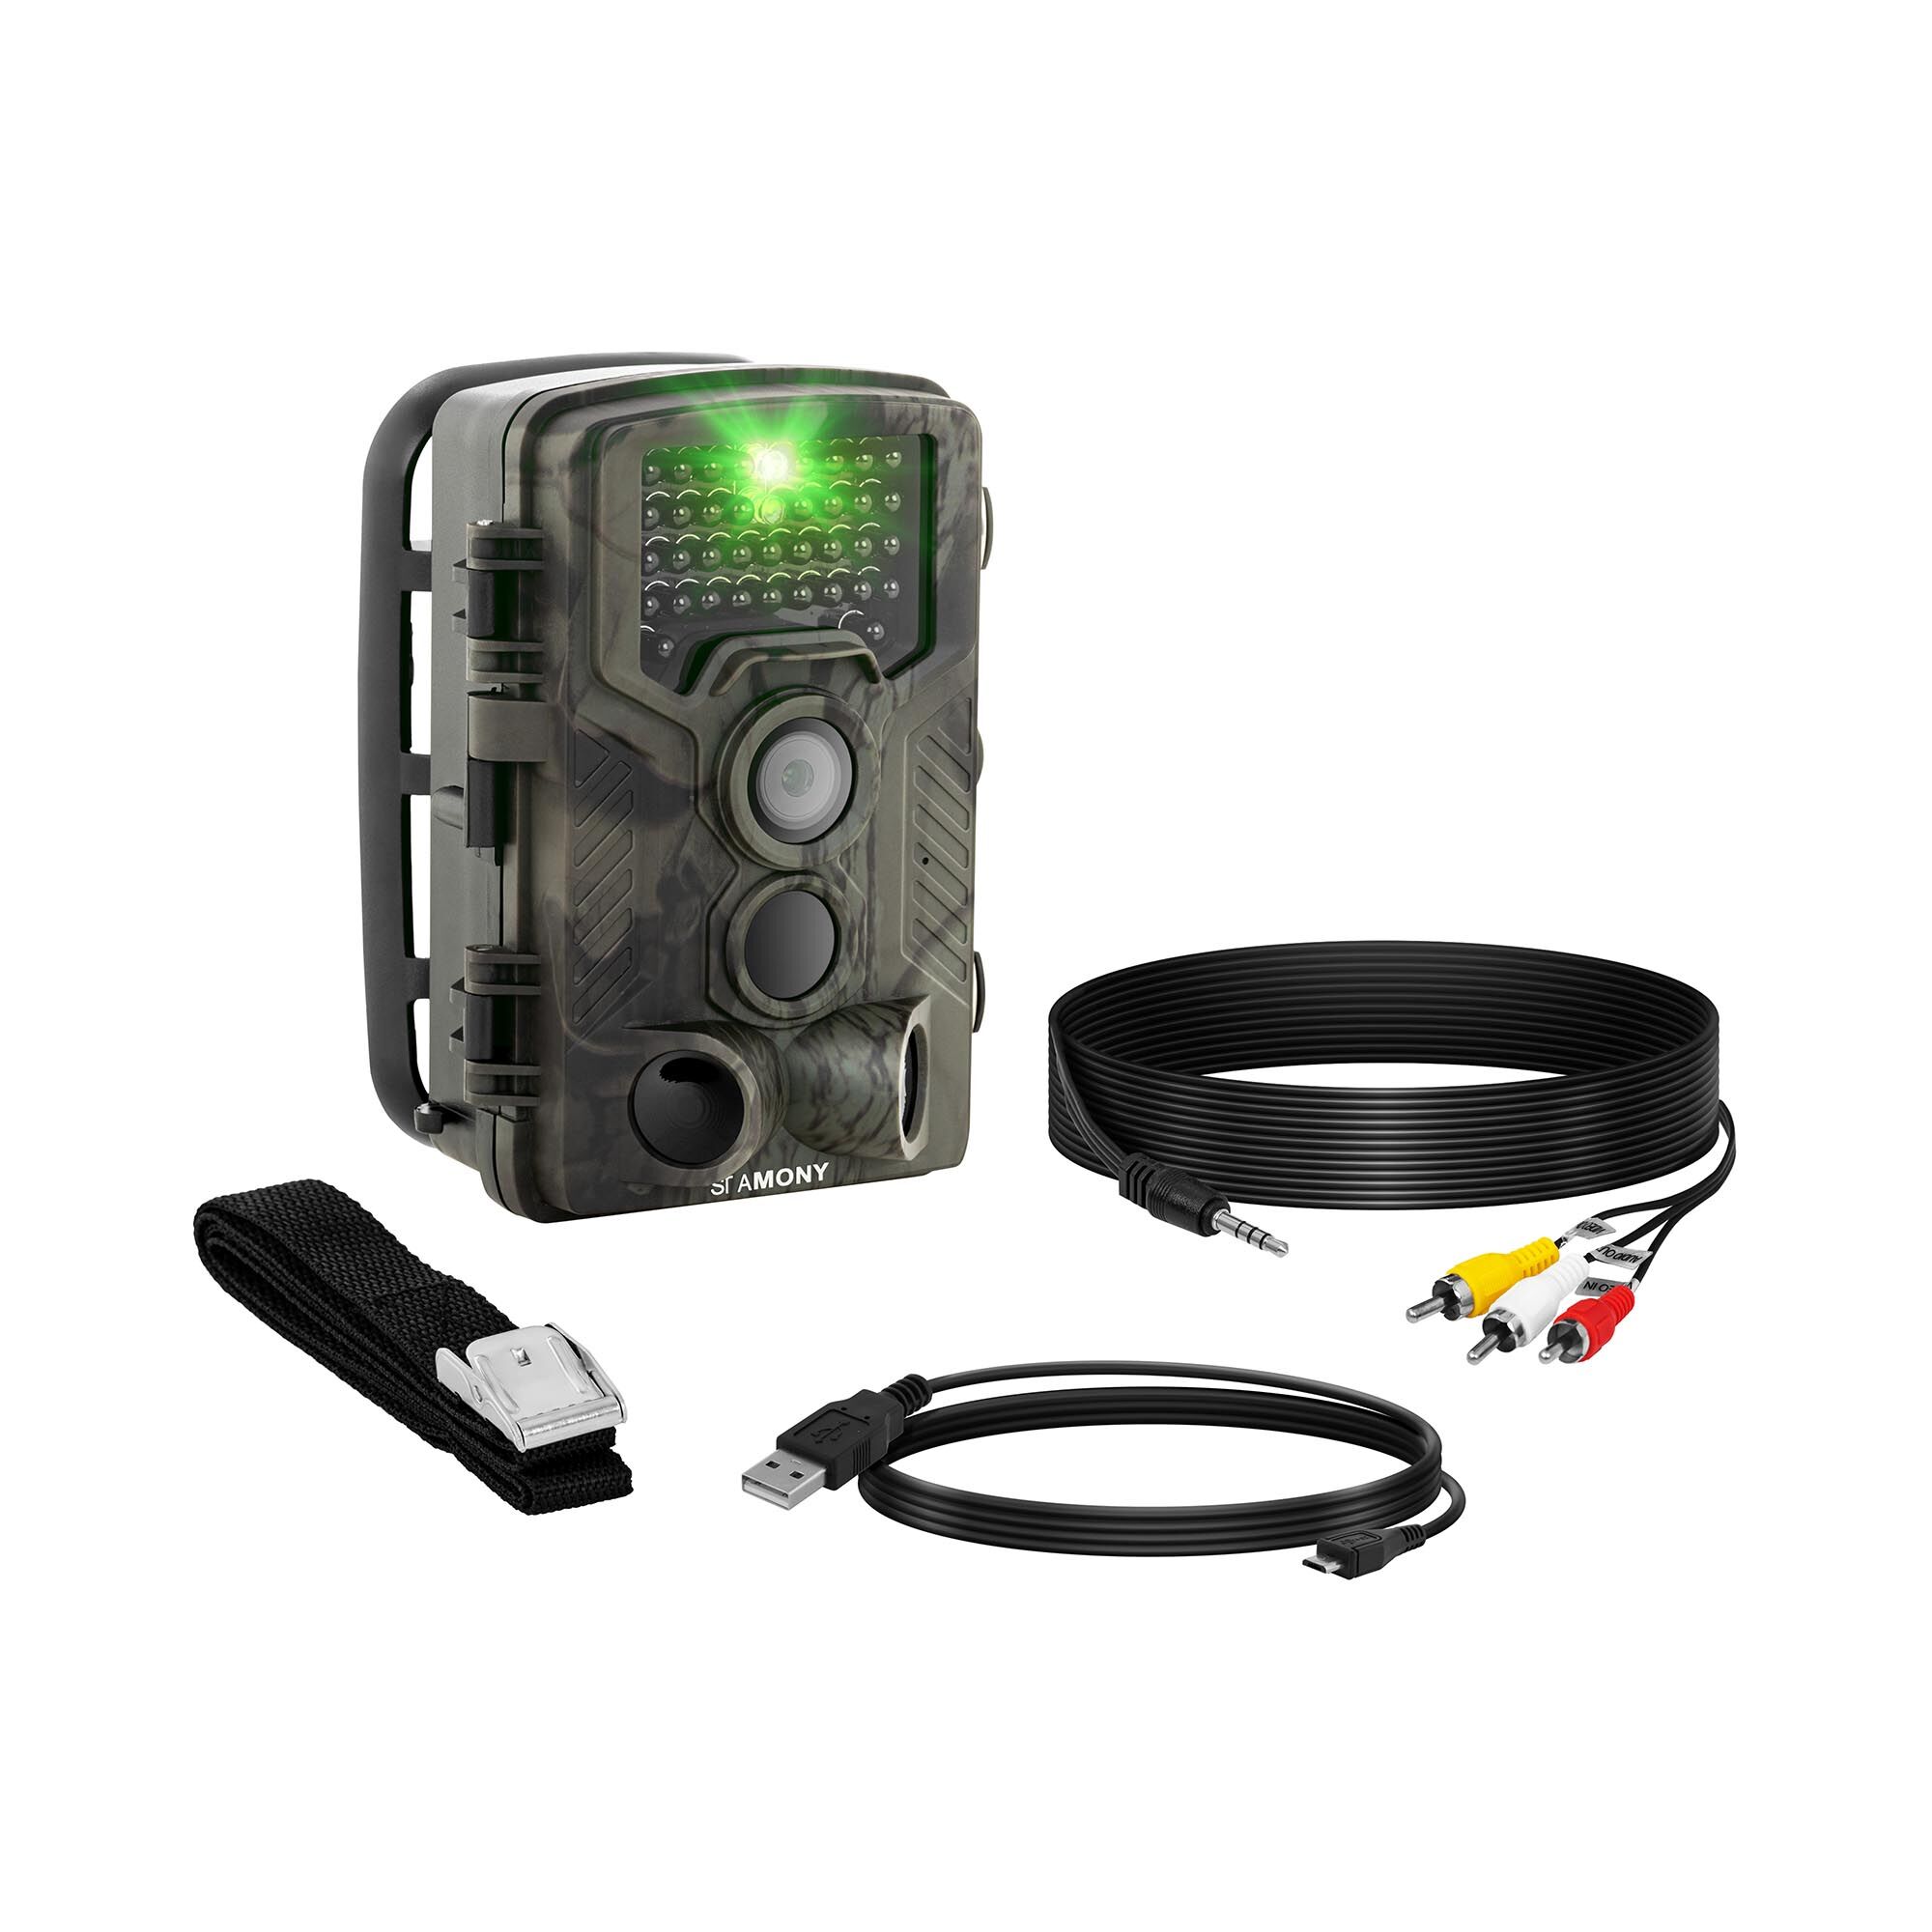 Stamony Câmera de caça - 8 MP - Full HD - 42 IR LED - 20 m - 0,3 s ST-HC-8000B